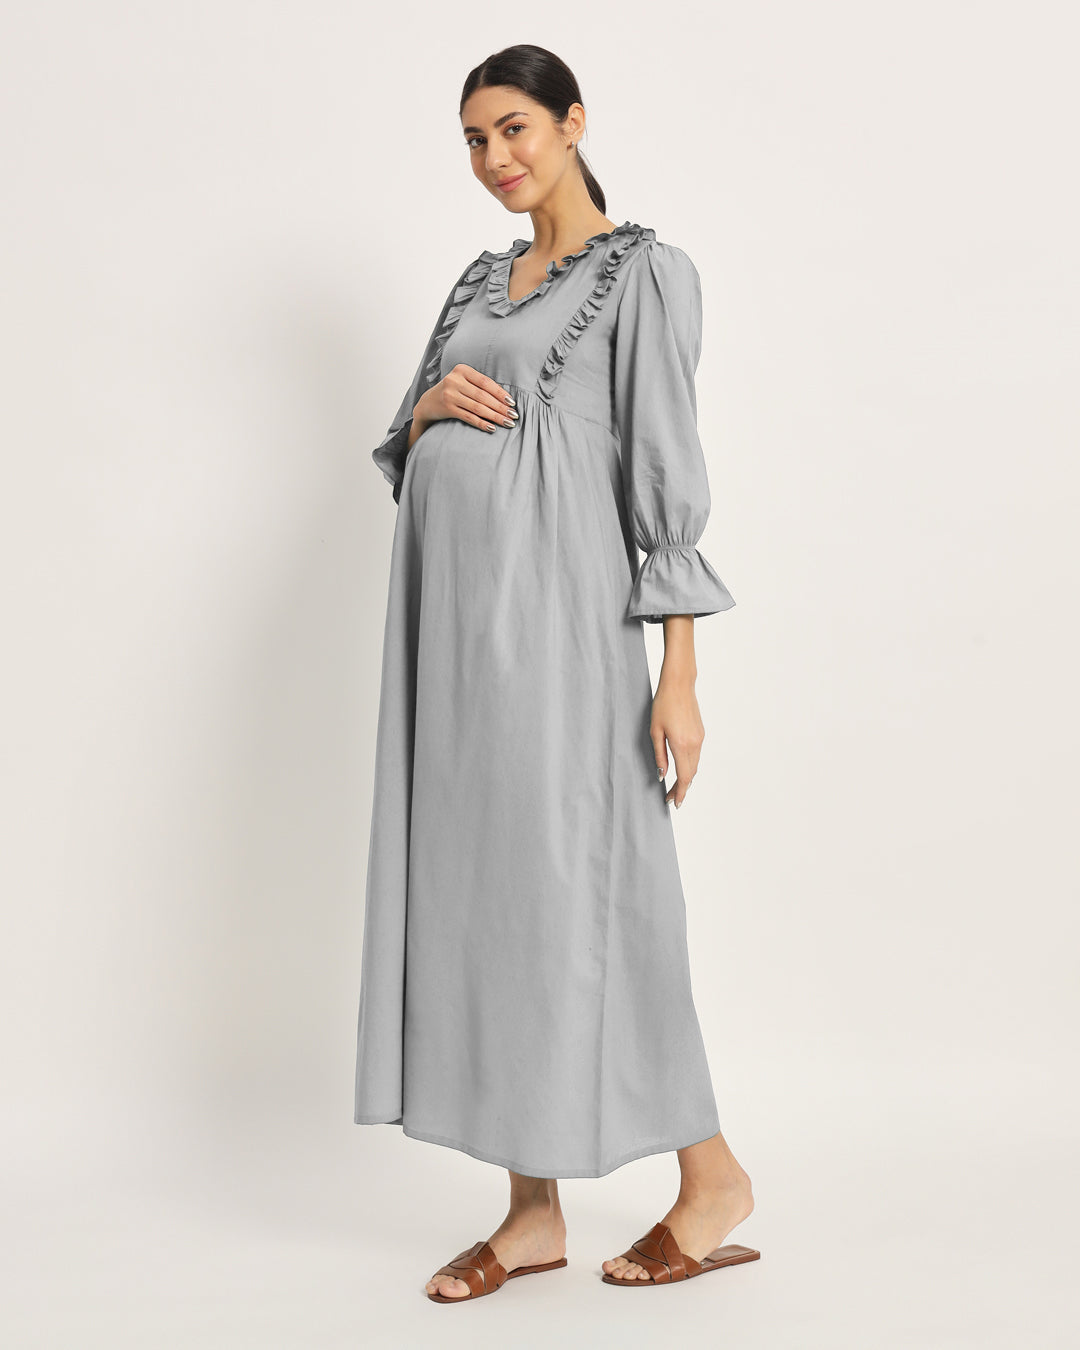 Combo: Iced Grey & Plum Passion Functional Flow Maternity & Nursing Dress - Set of 2